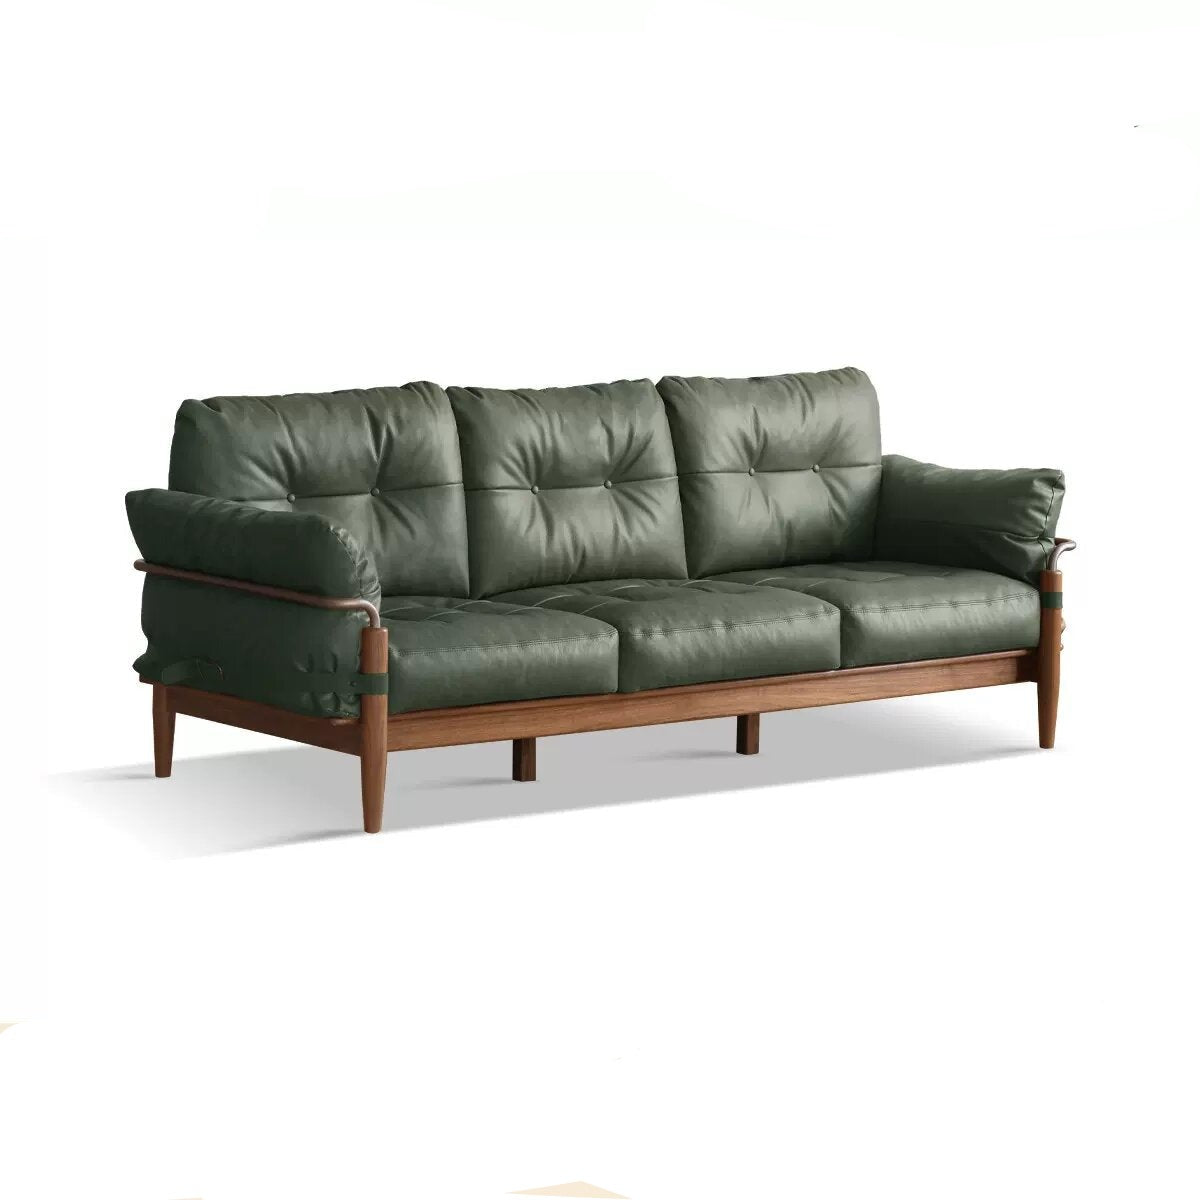 Black walnut solid wood Leather sofa-